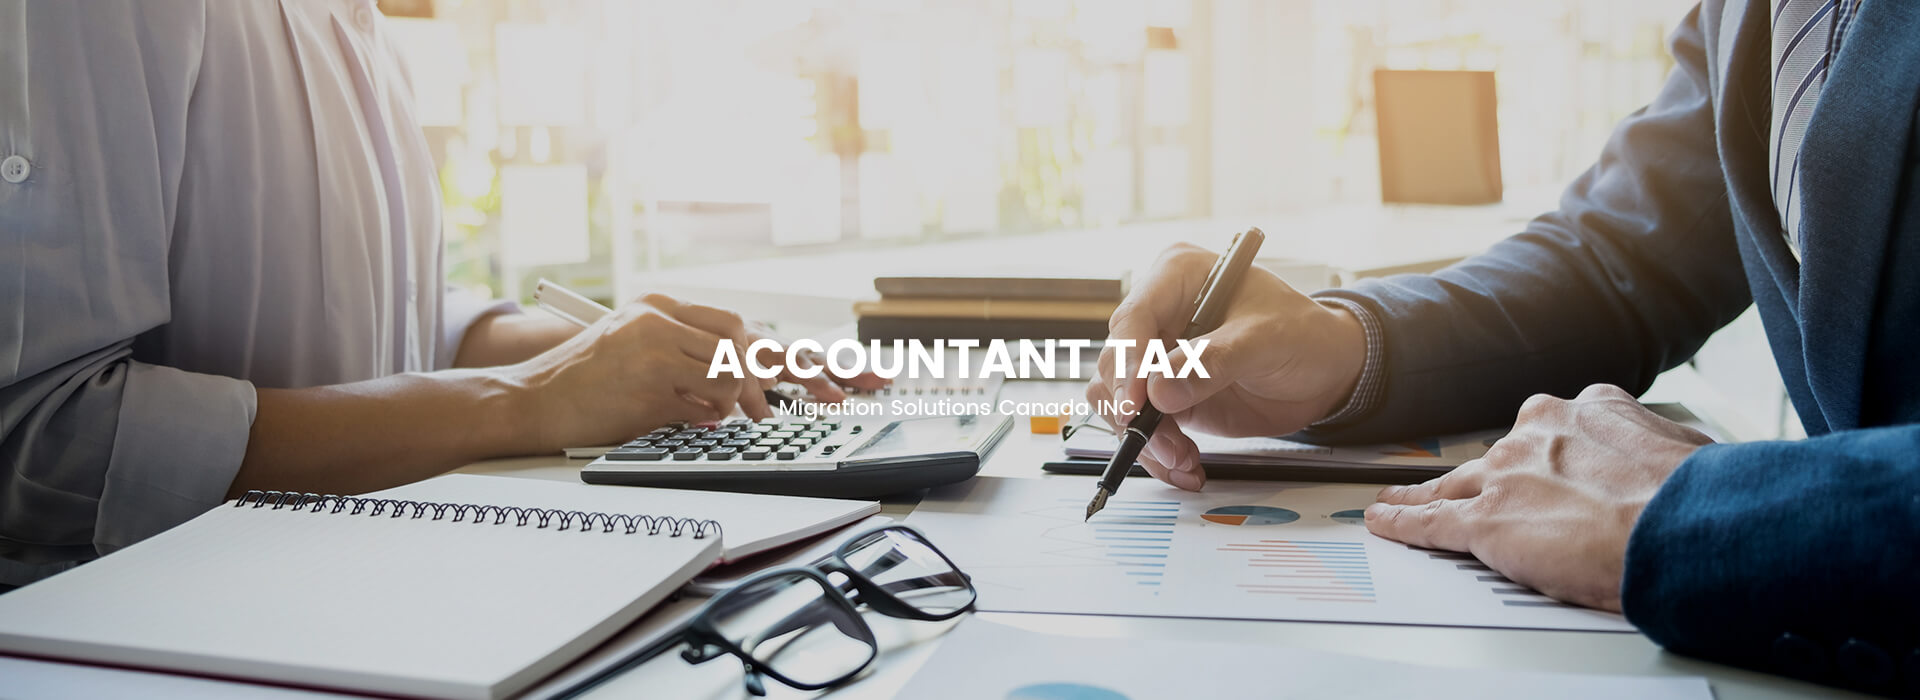 Accountant Tax